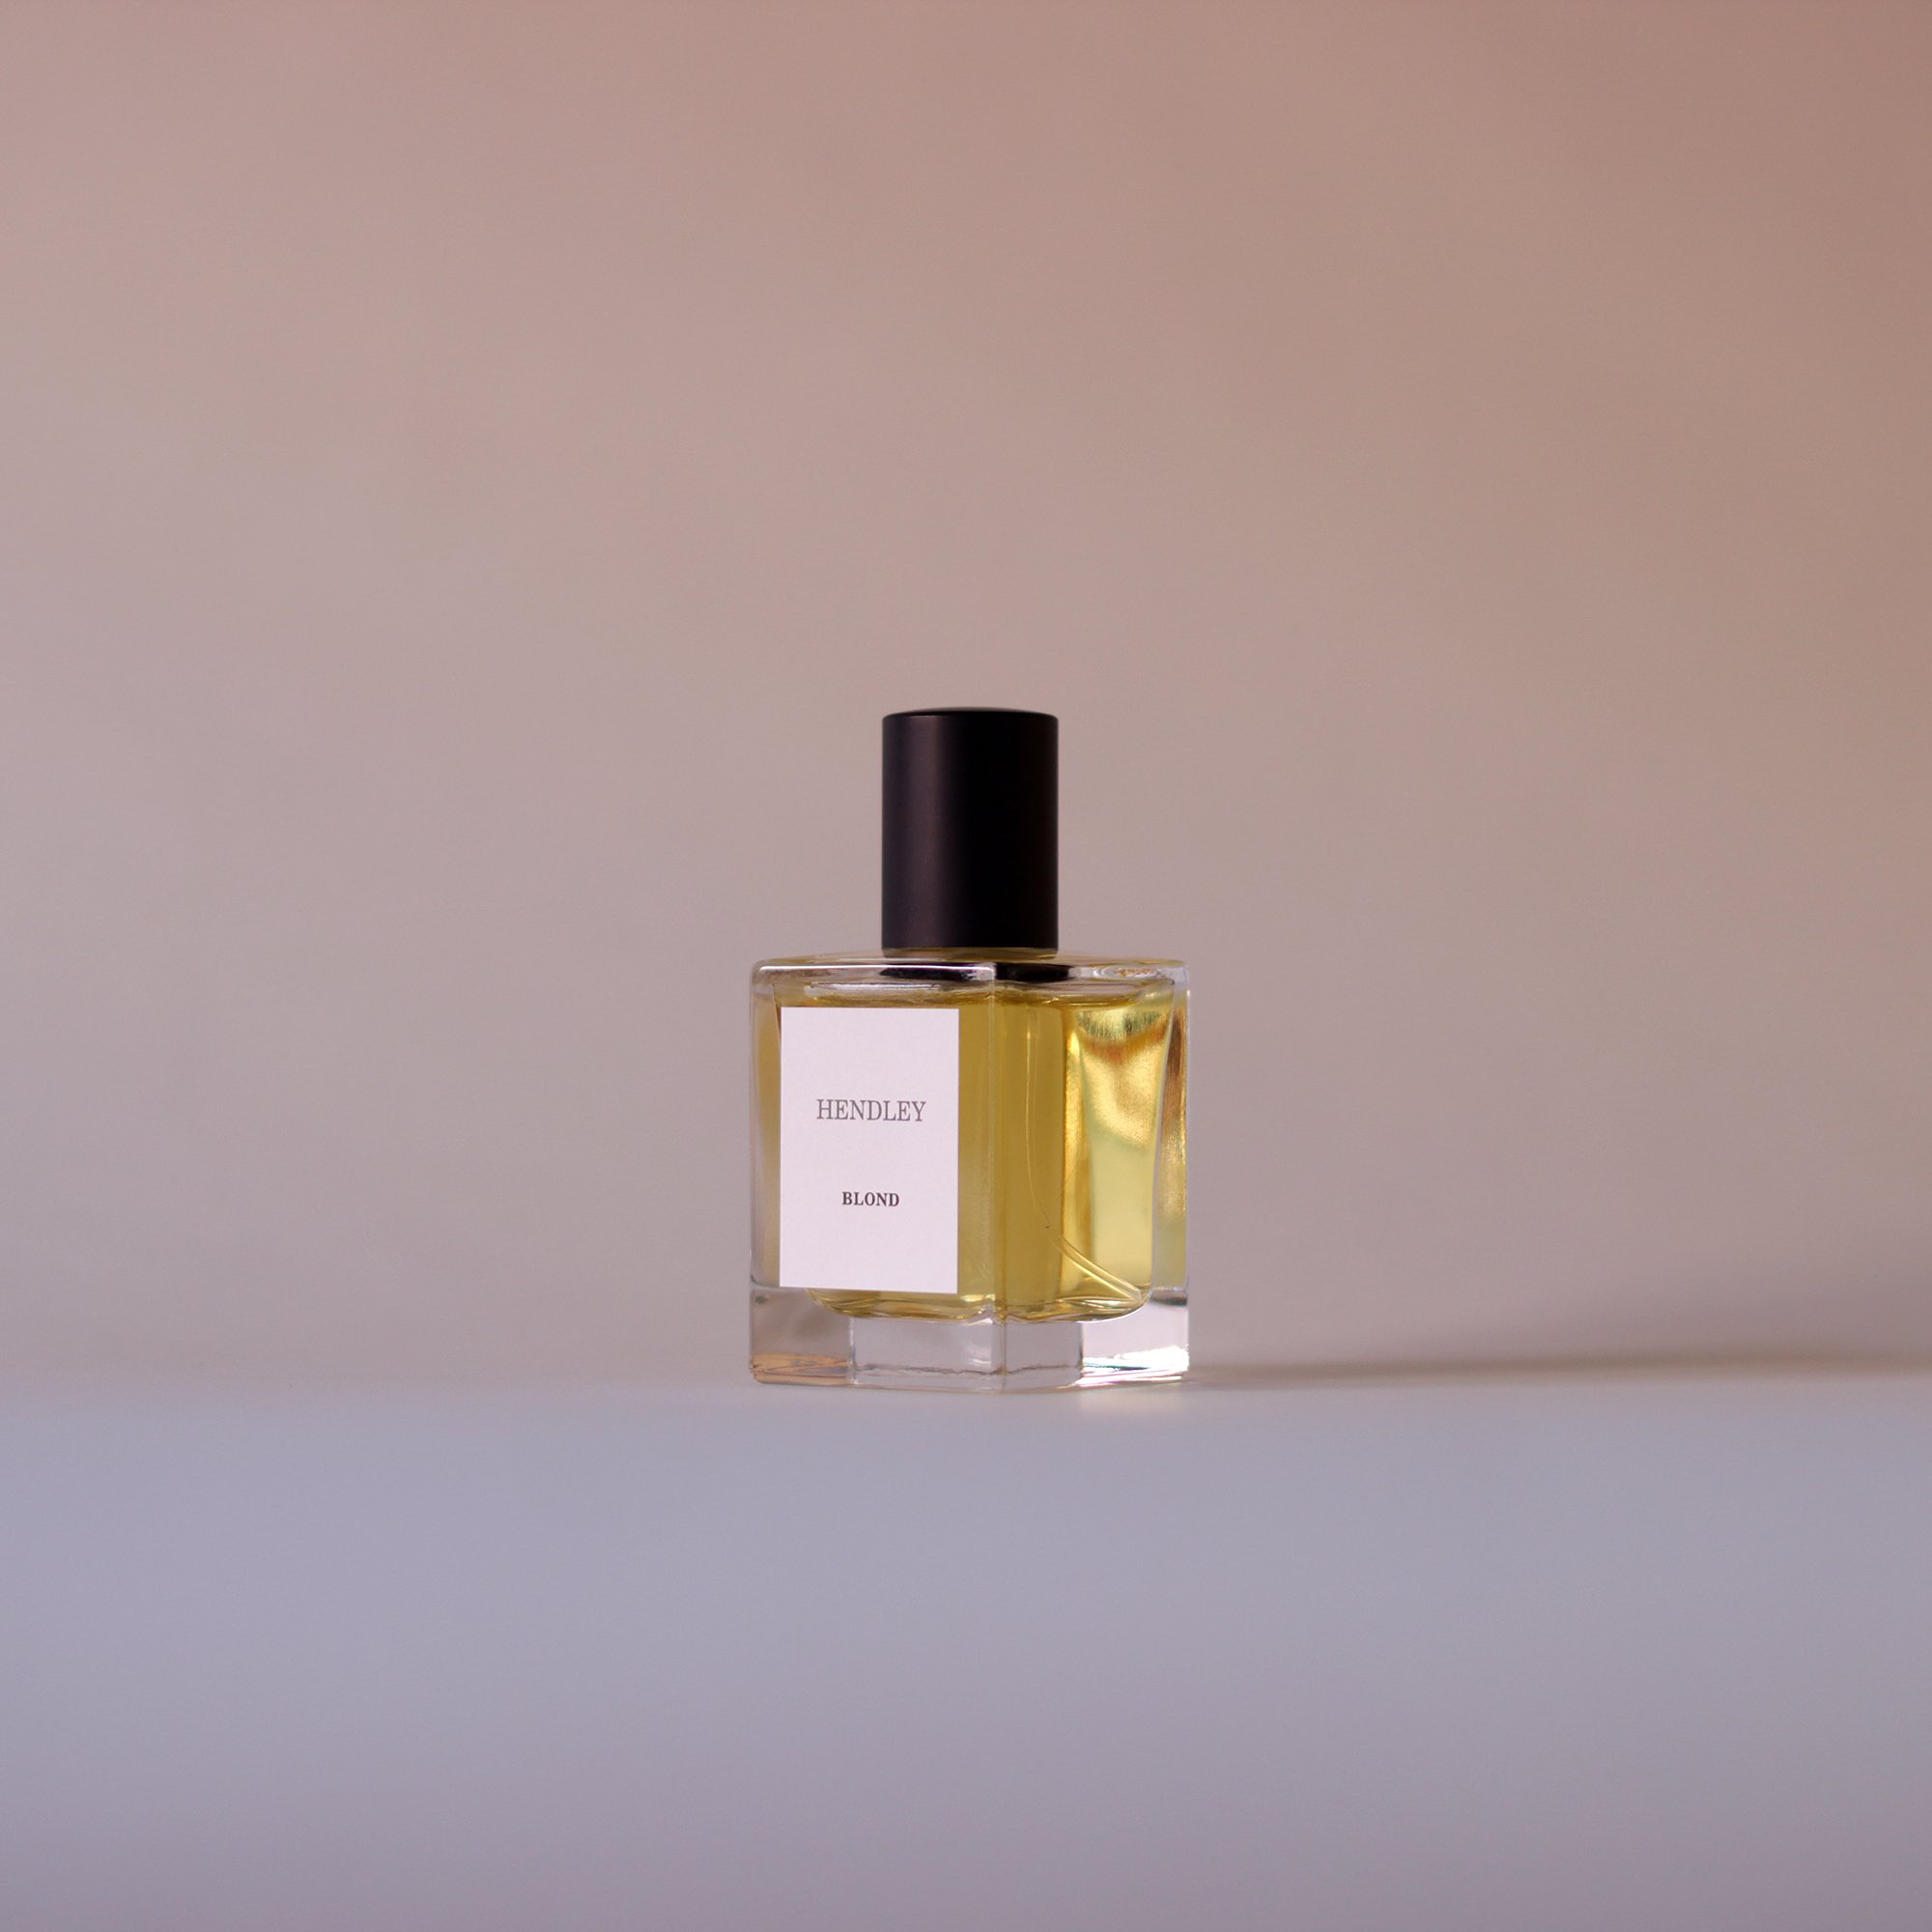 Hendley Perfumes